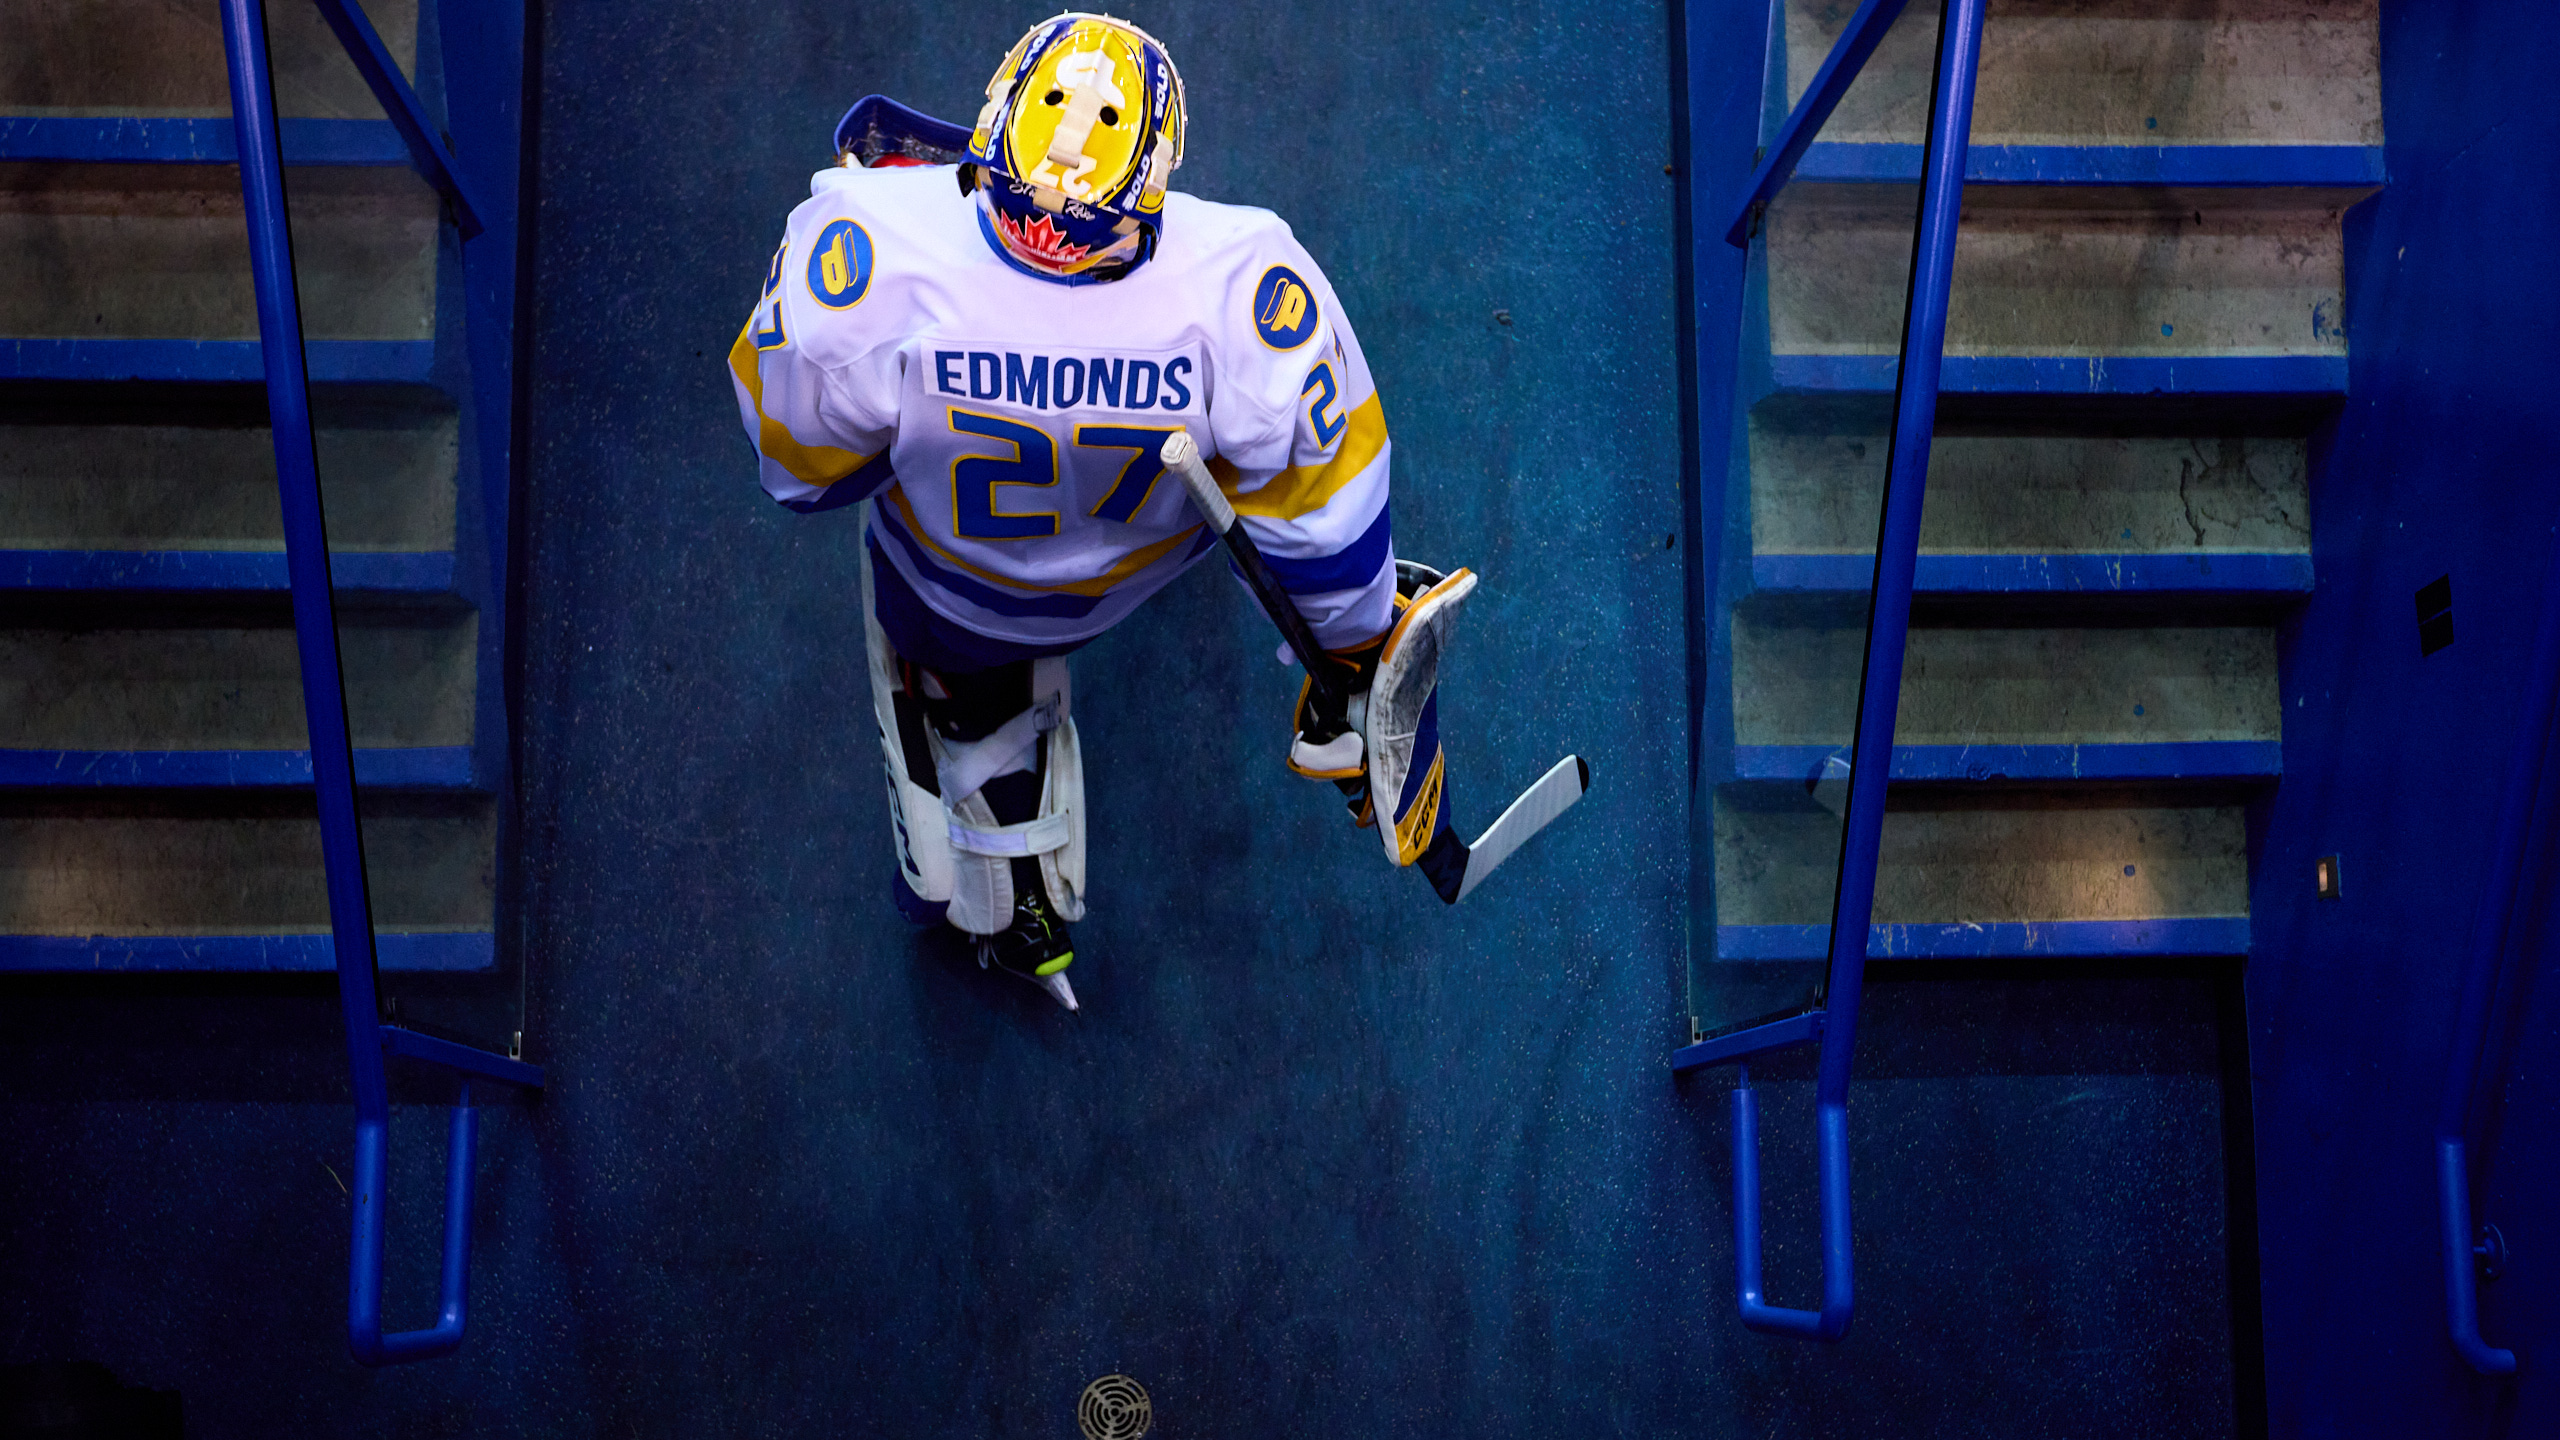 TMU men's hockey goaltender Kai Edmonds walks out of the locker room tunnel towards the ice